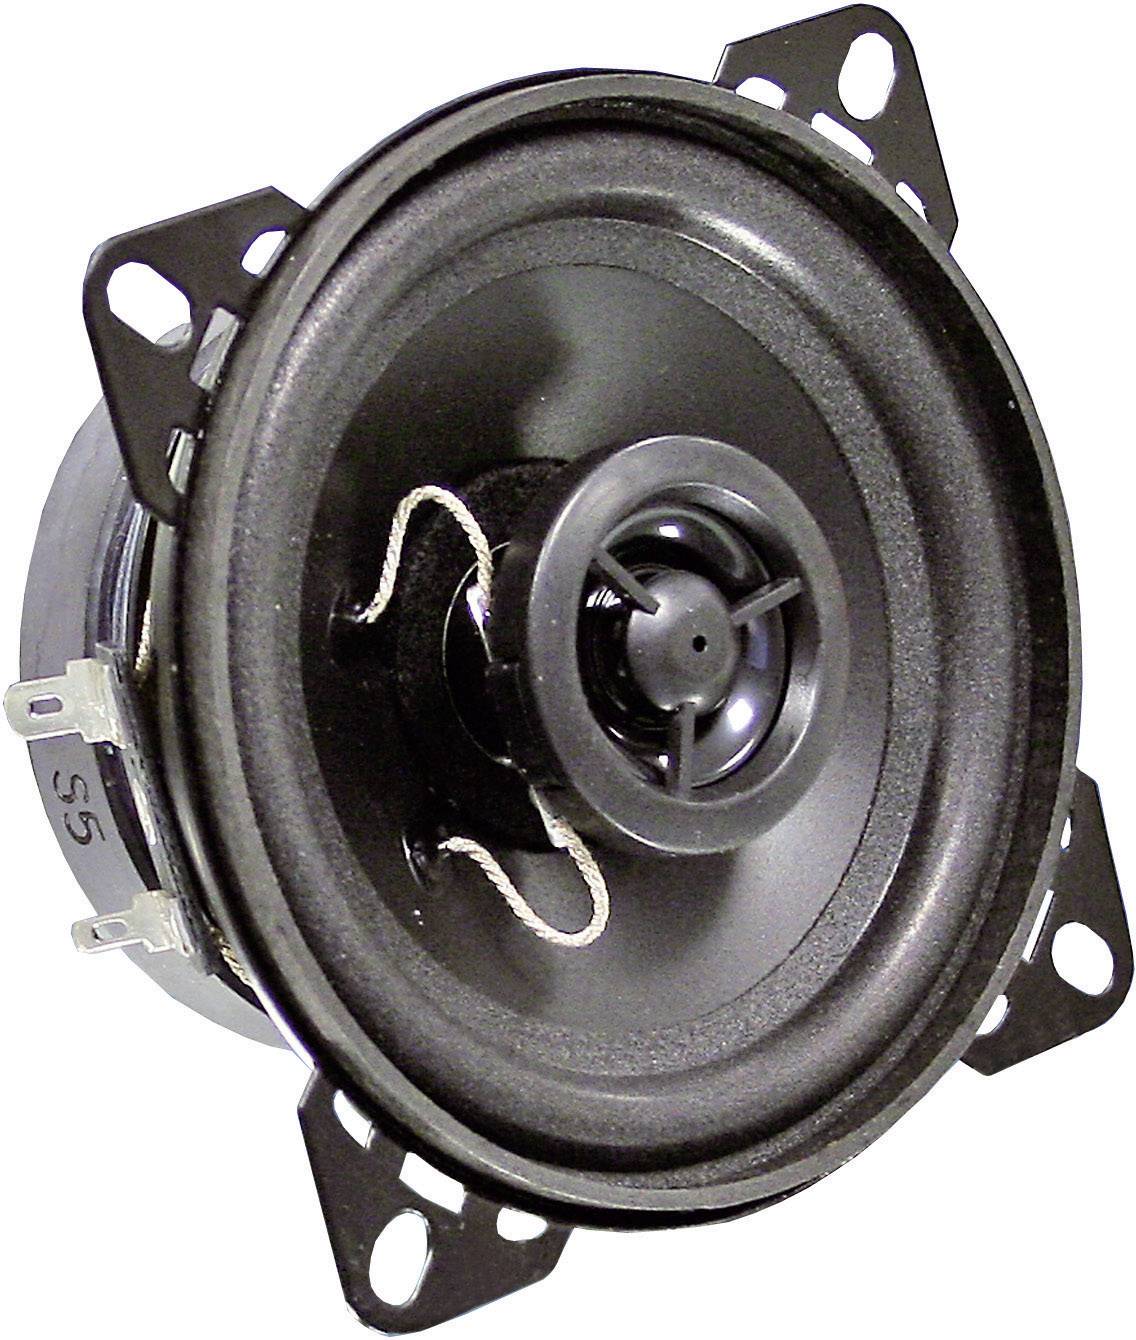 VISATON Koaxial Lautsprecher - 10 cm (4\") 2-Wege-Koaxiallautsprecher mit Euro-Normkorb und Piezo-Hoc